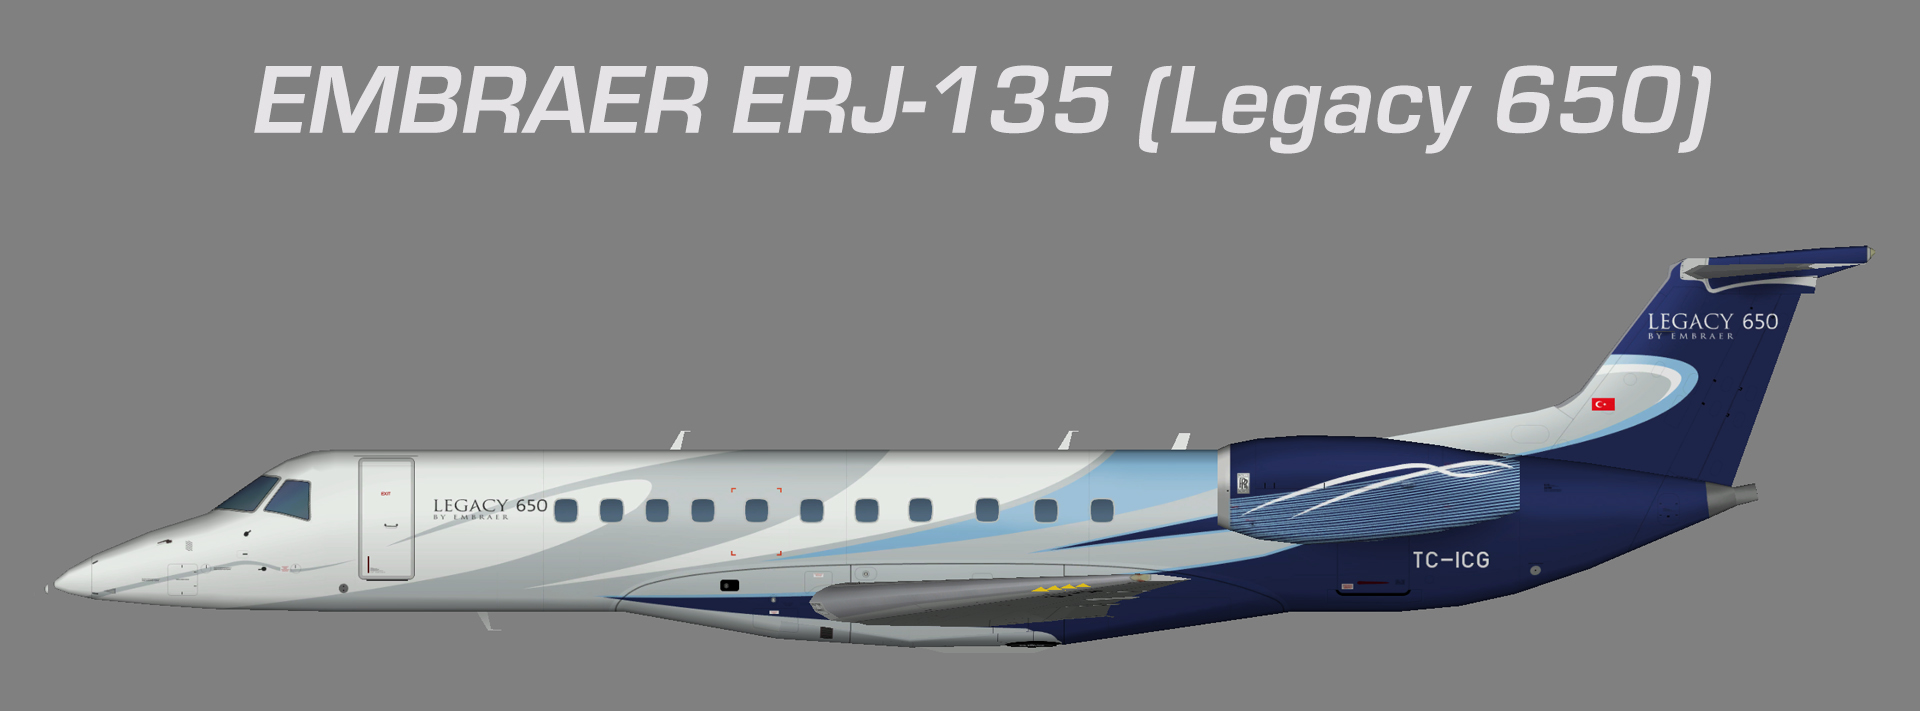 TAV Havacilik Embraer ERJ-135 (Legacy 650)